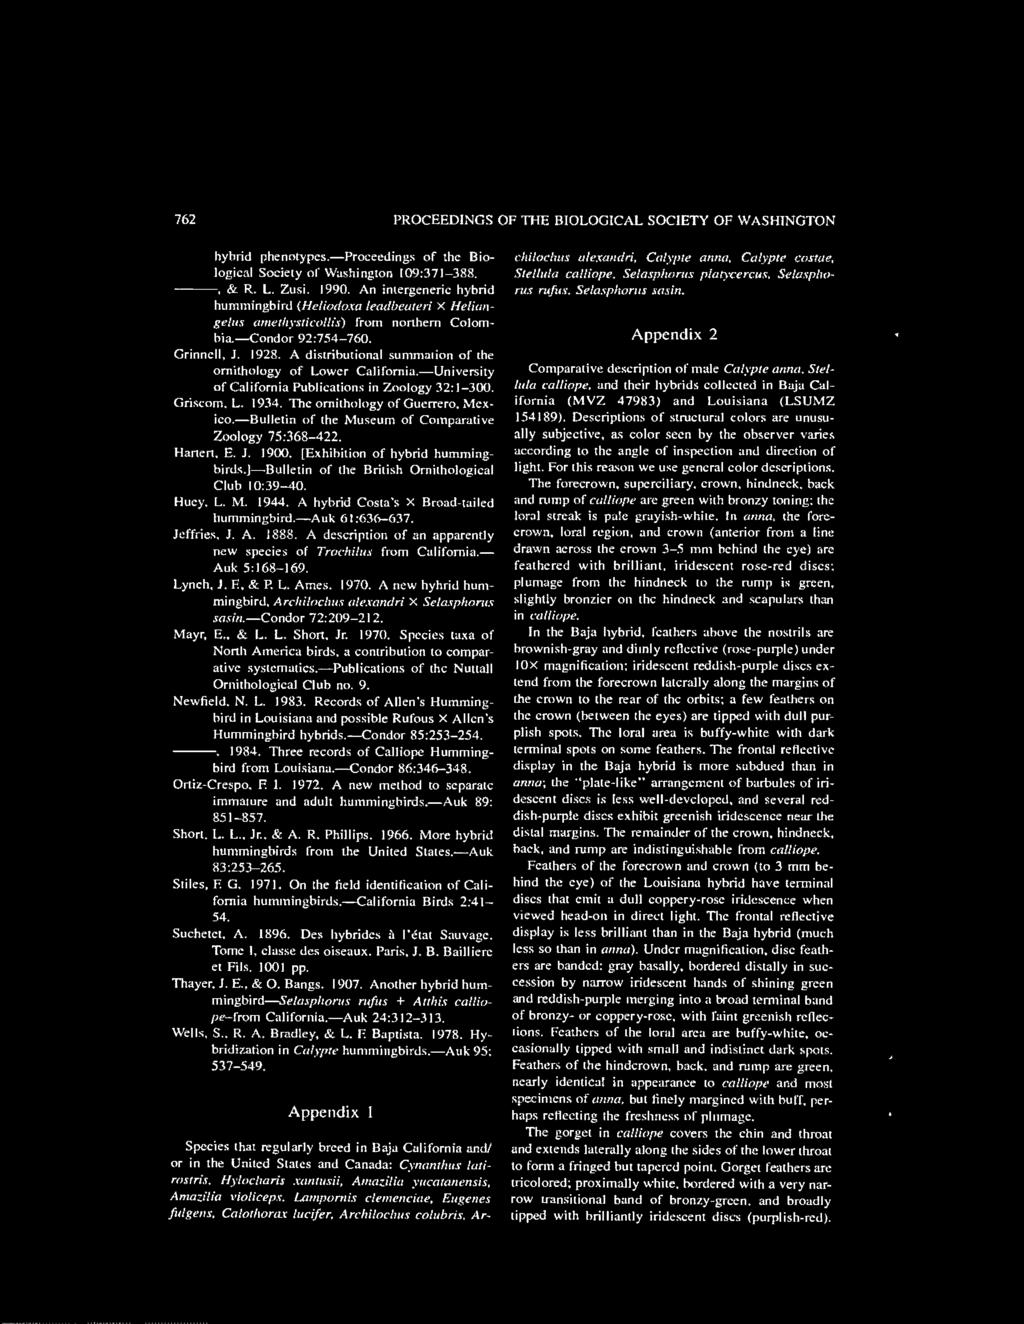 Auk 61:636-637. Jeffries, J. A. 1888. A description of an apparently new species of Trocbitus from California. Auk 5:168-169. Lynch, J. E, & P. L. Ames. 1970.